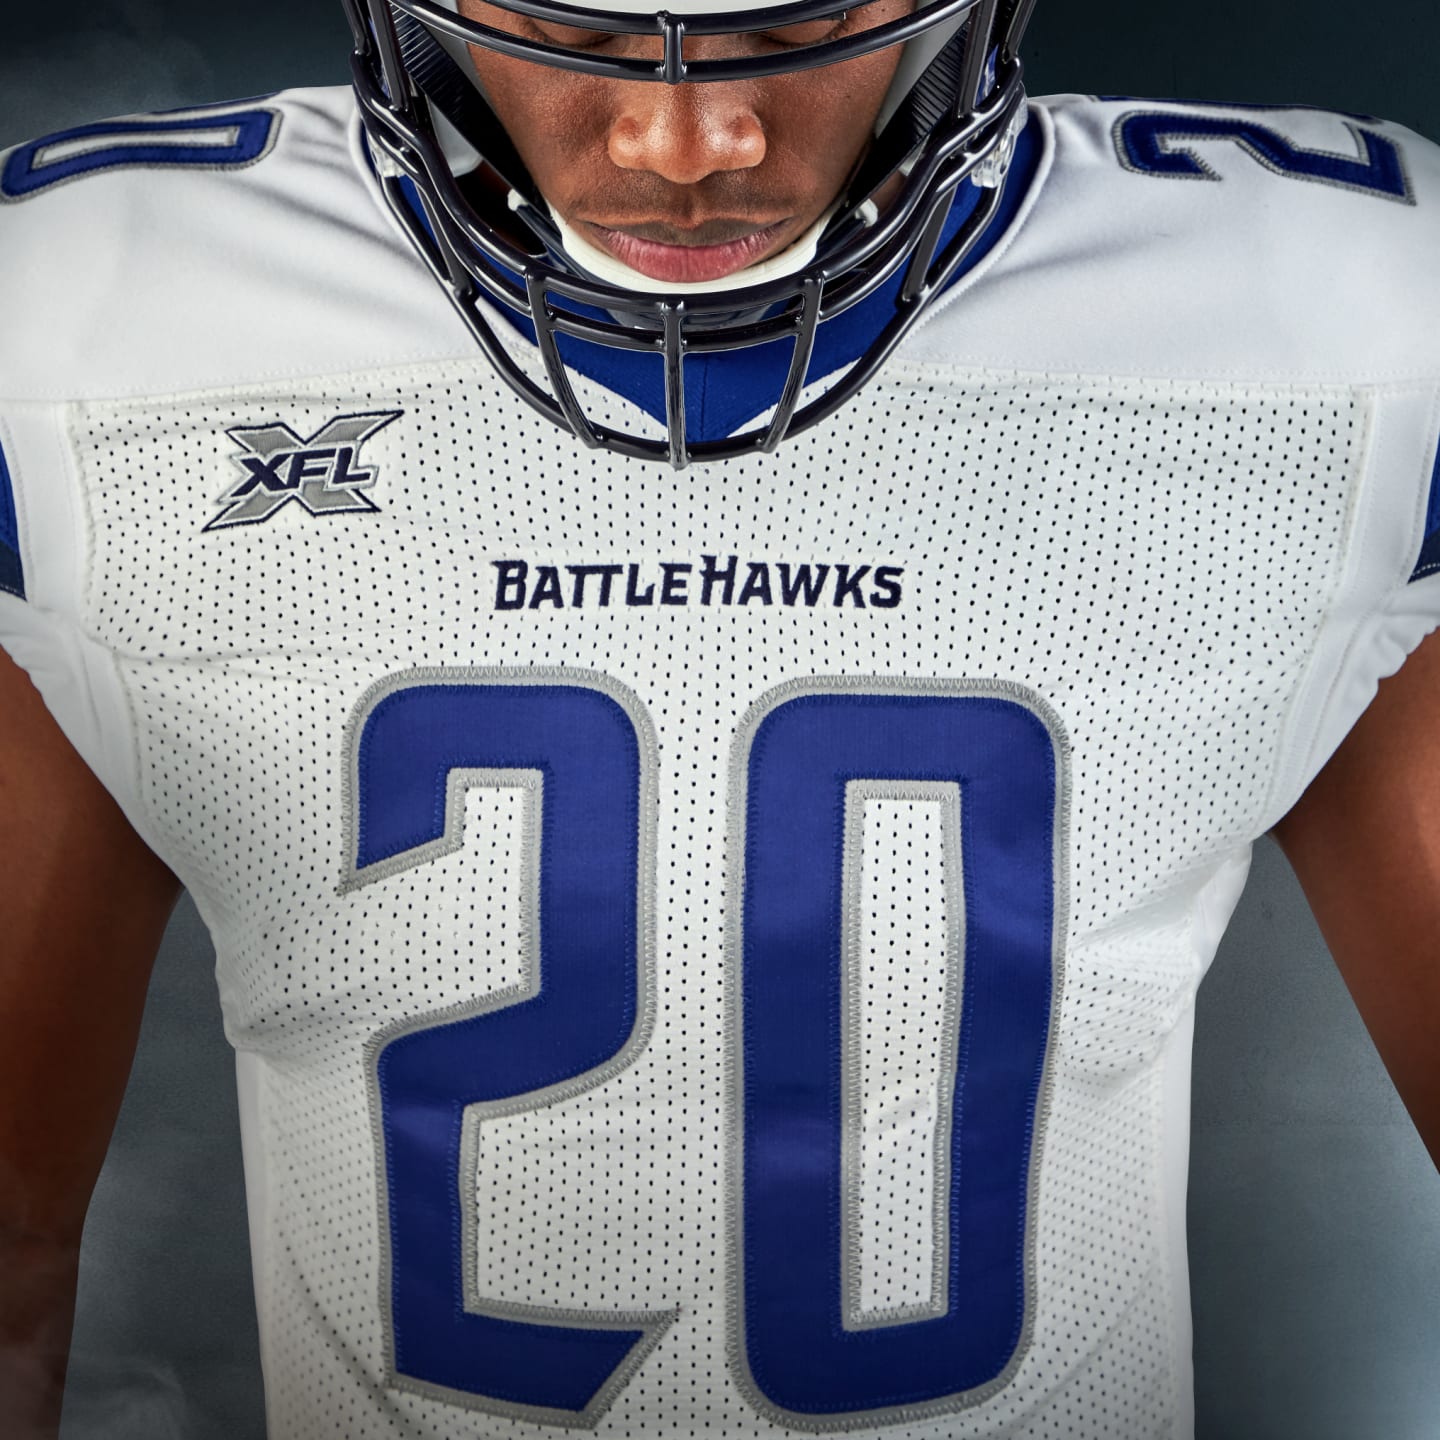 St. Louis Battlehawks unveiled uniforms ahead of 2023 XFL relaunch